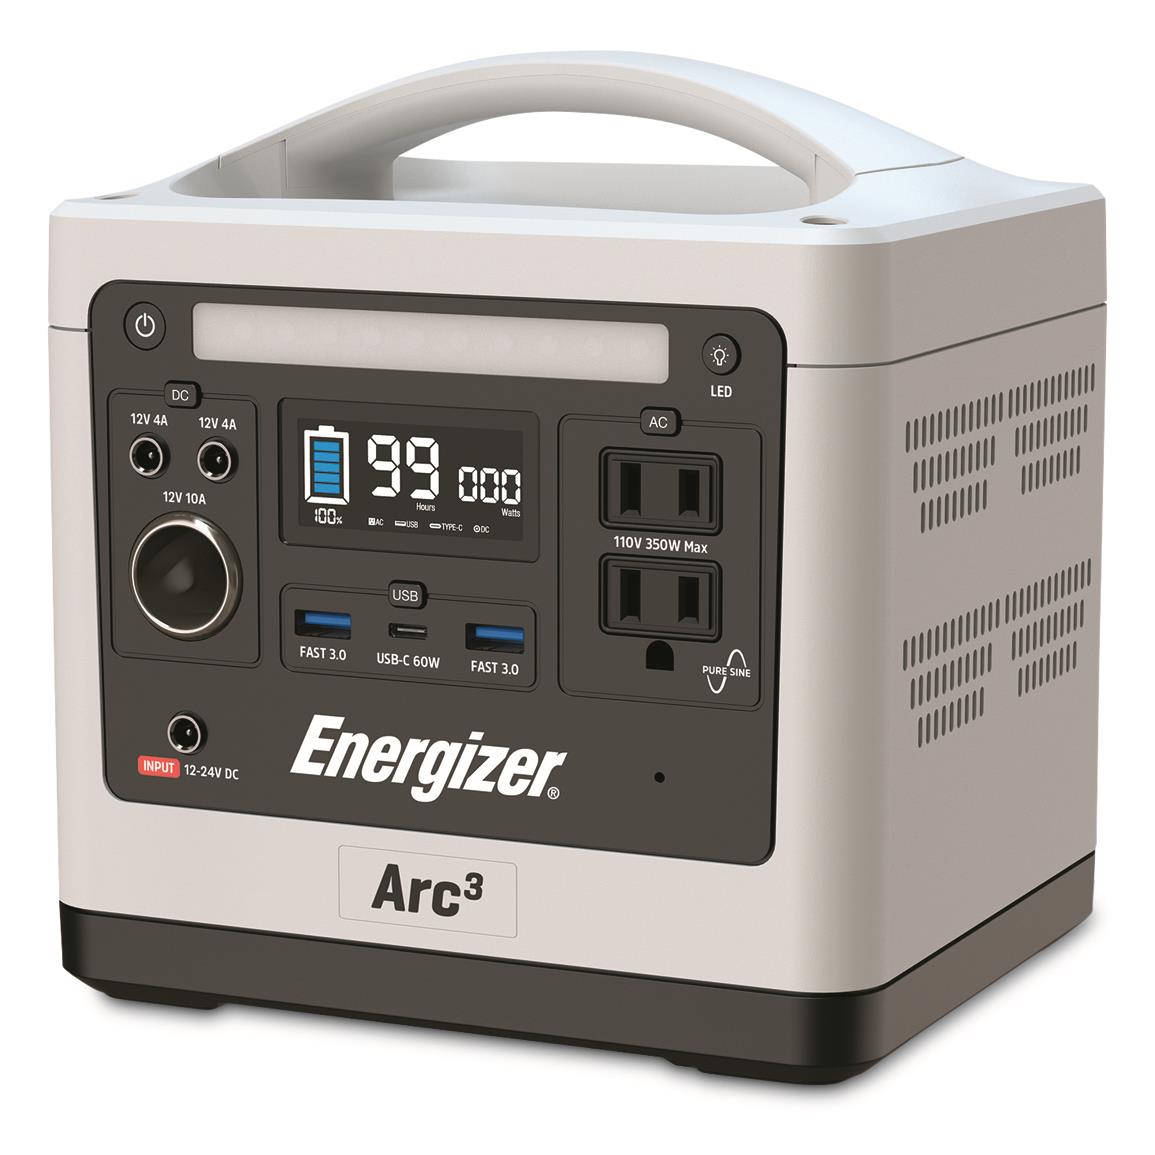 Energizer ARC 3 300W Lithium-Ion Power Station